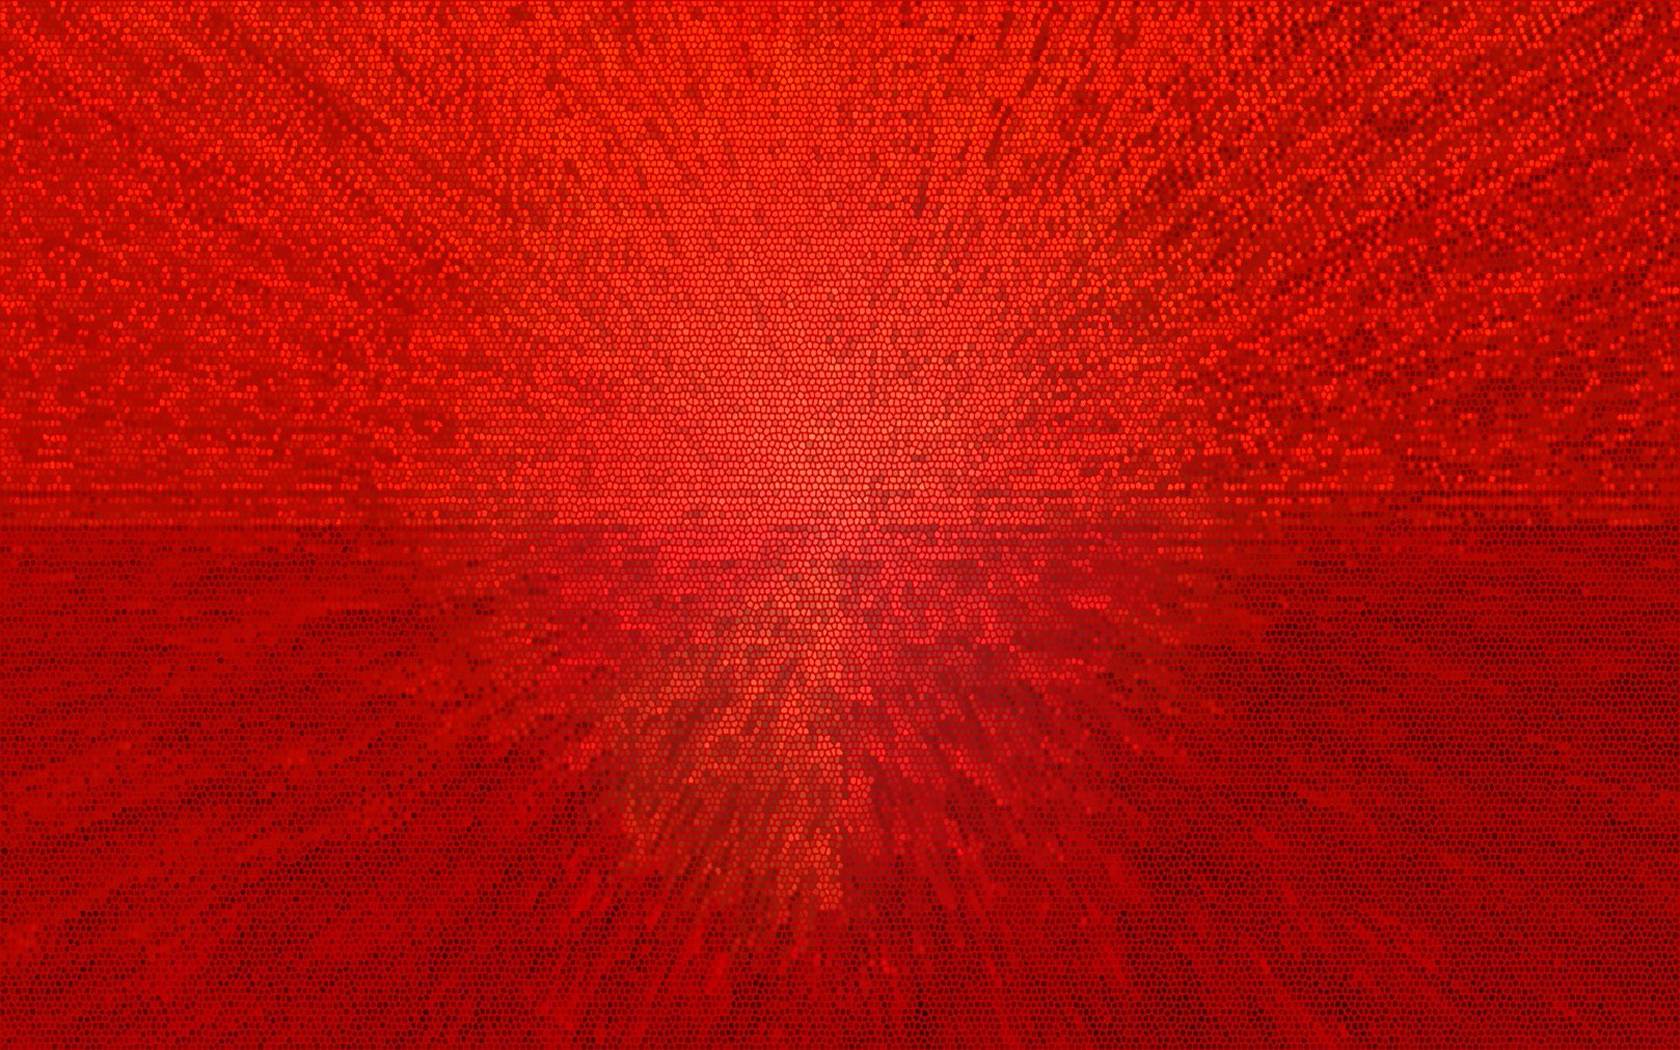 Awesome HD Red Wallpaper HDWallSource com HDWallsource